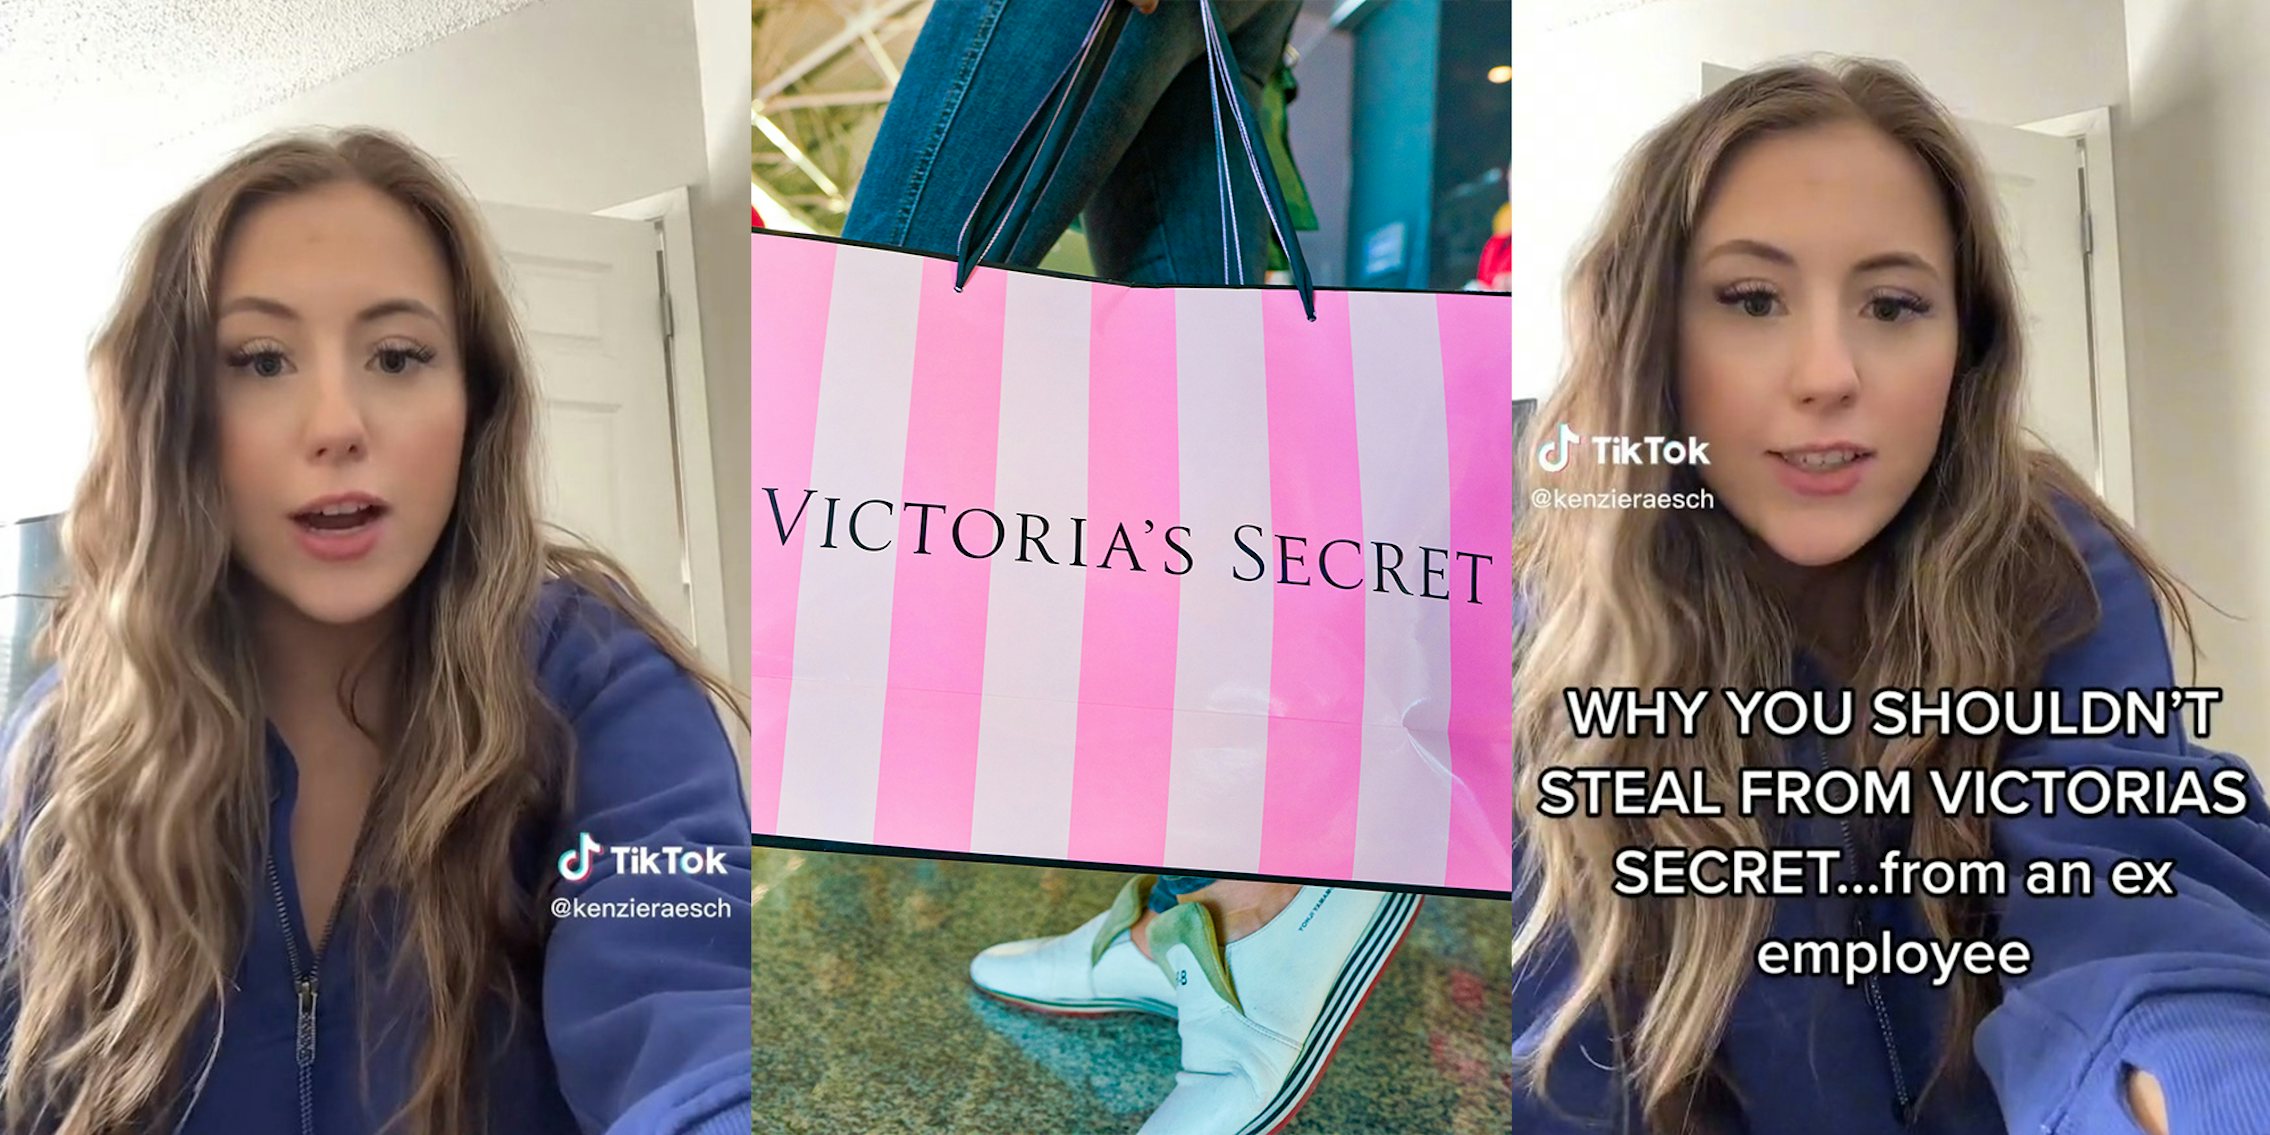 Former Victoria's Secret worker shares PSA to shoplifters